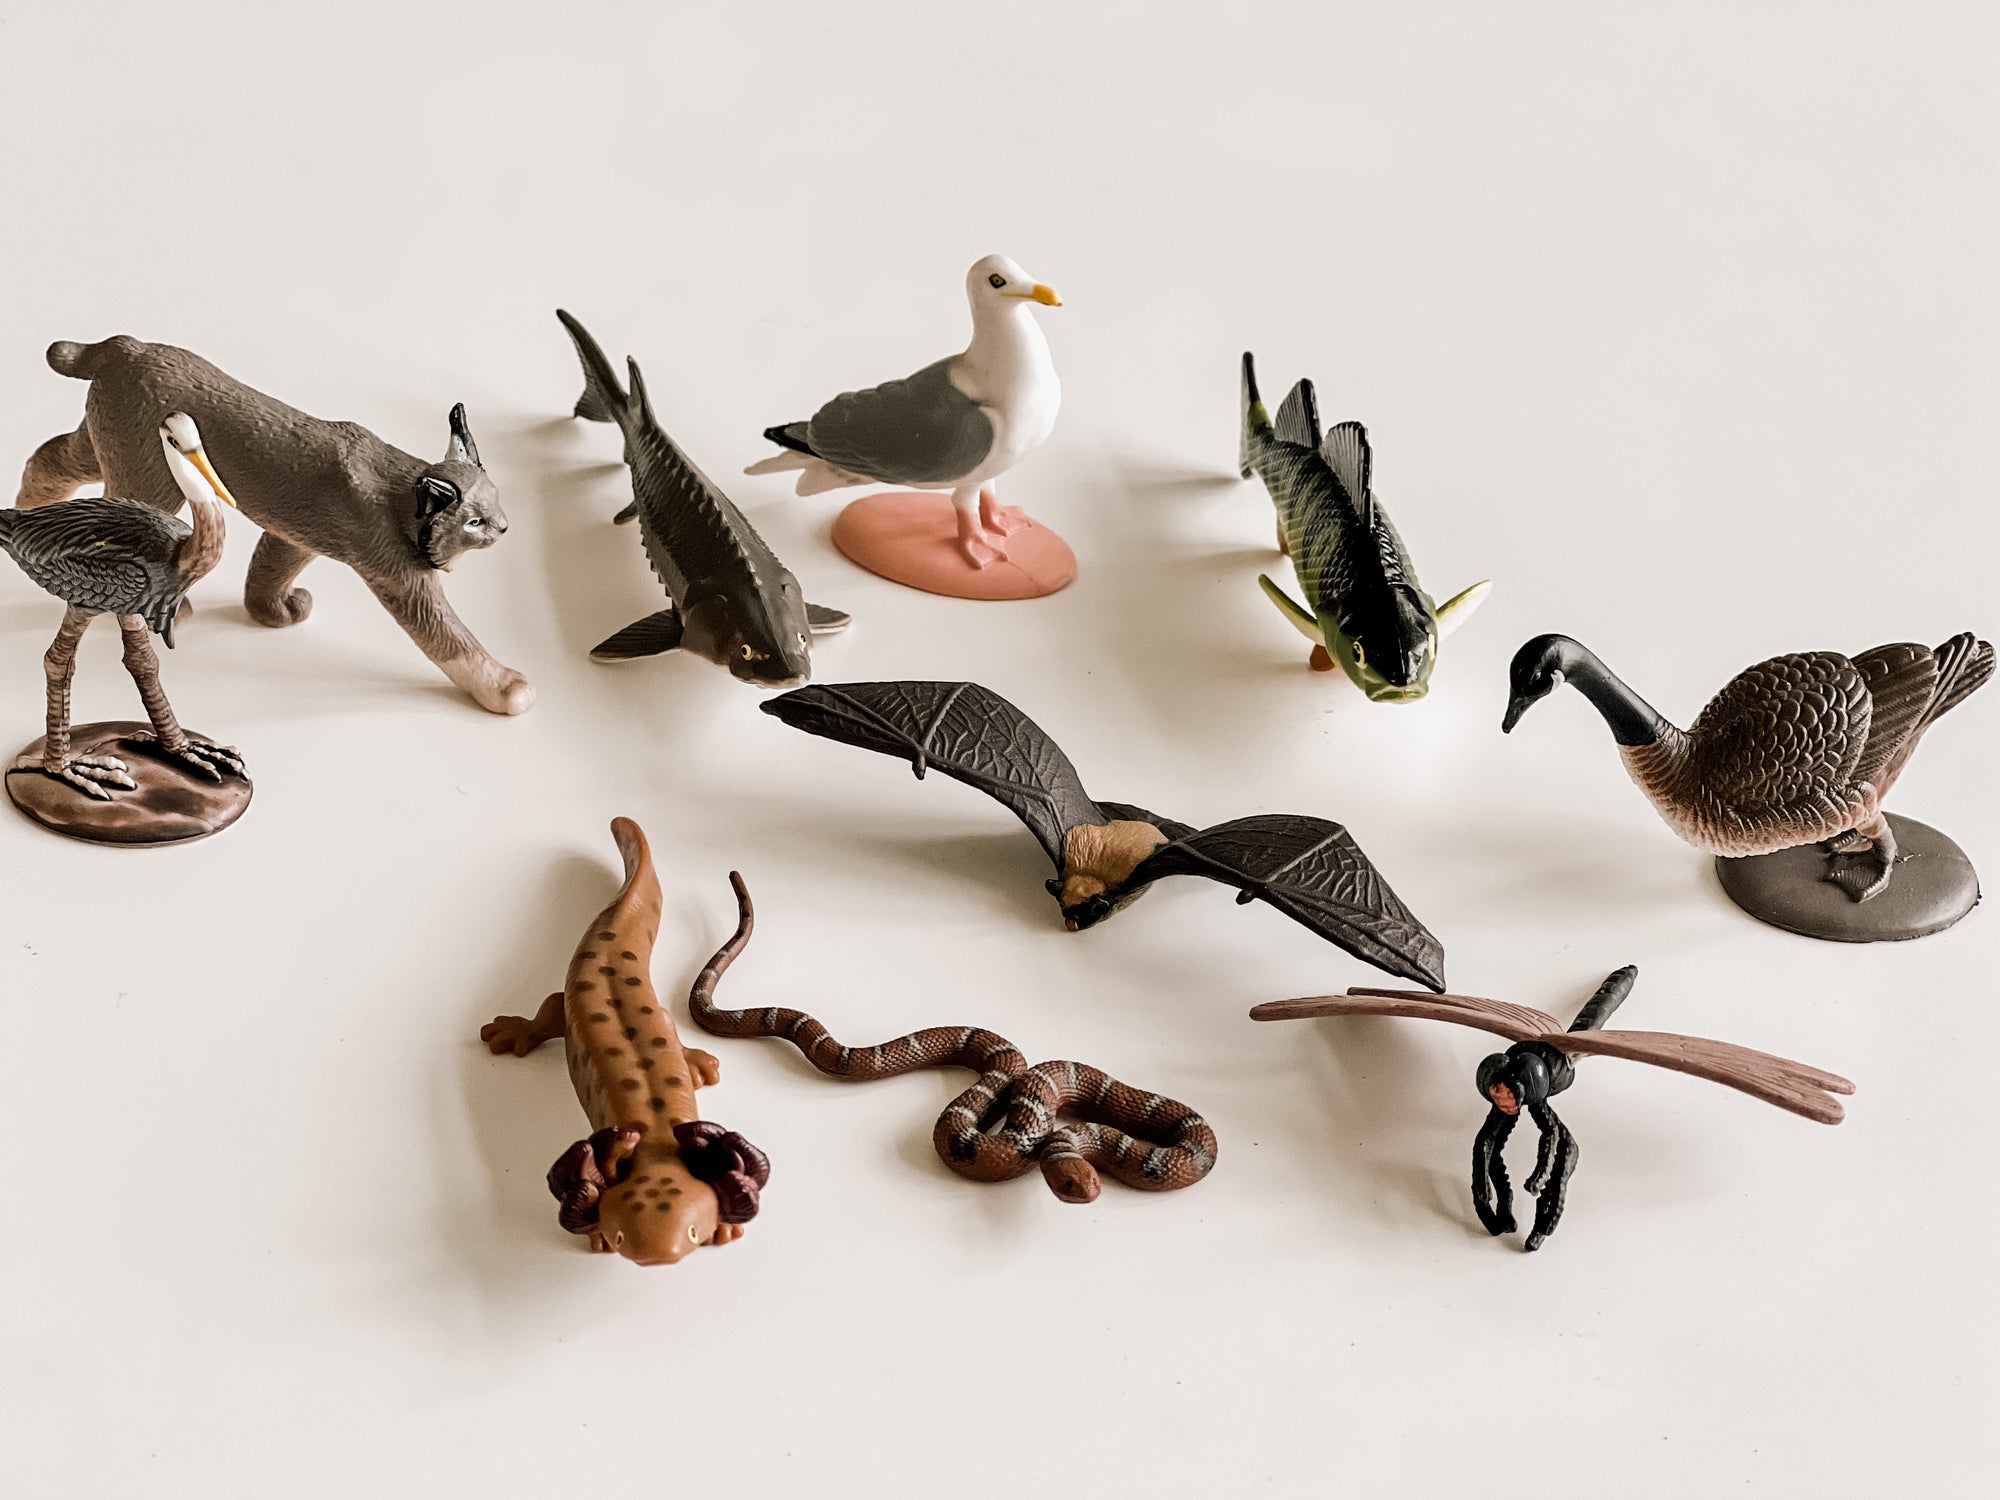 TOOB Great Lakes Biome Animal Figurines